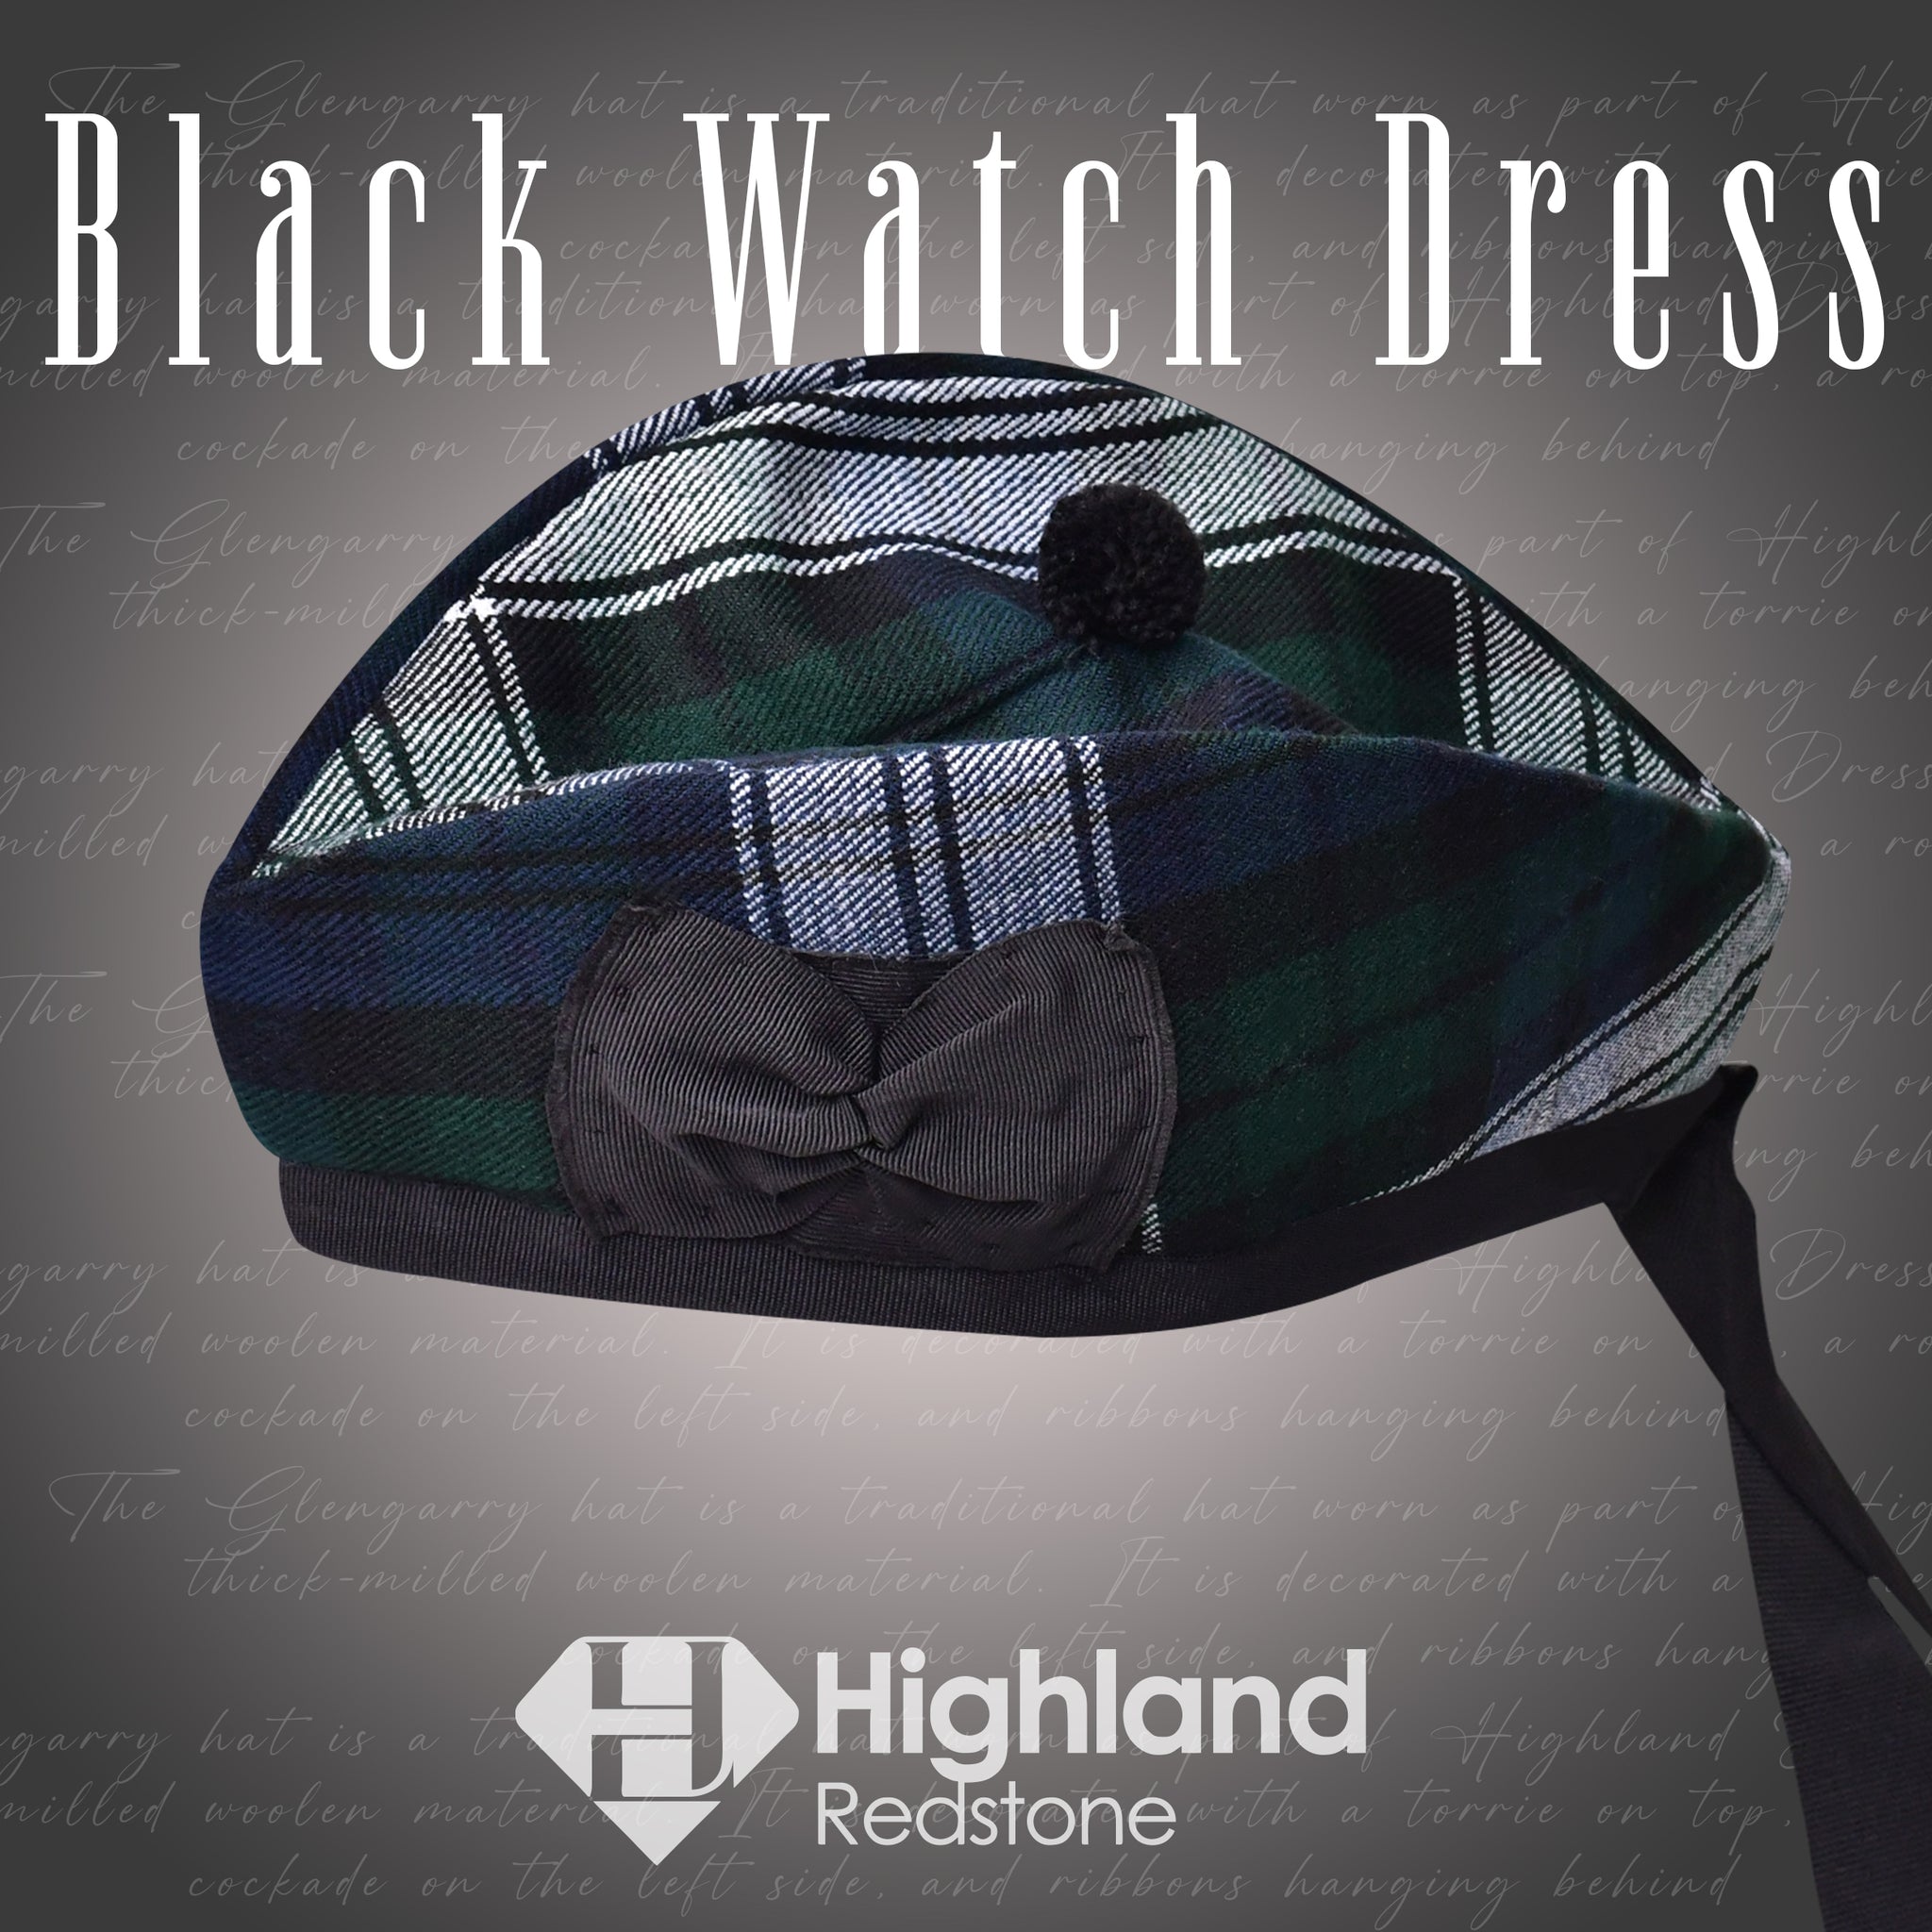 Black Watch Dress Glengarry